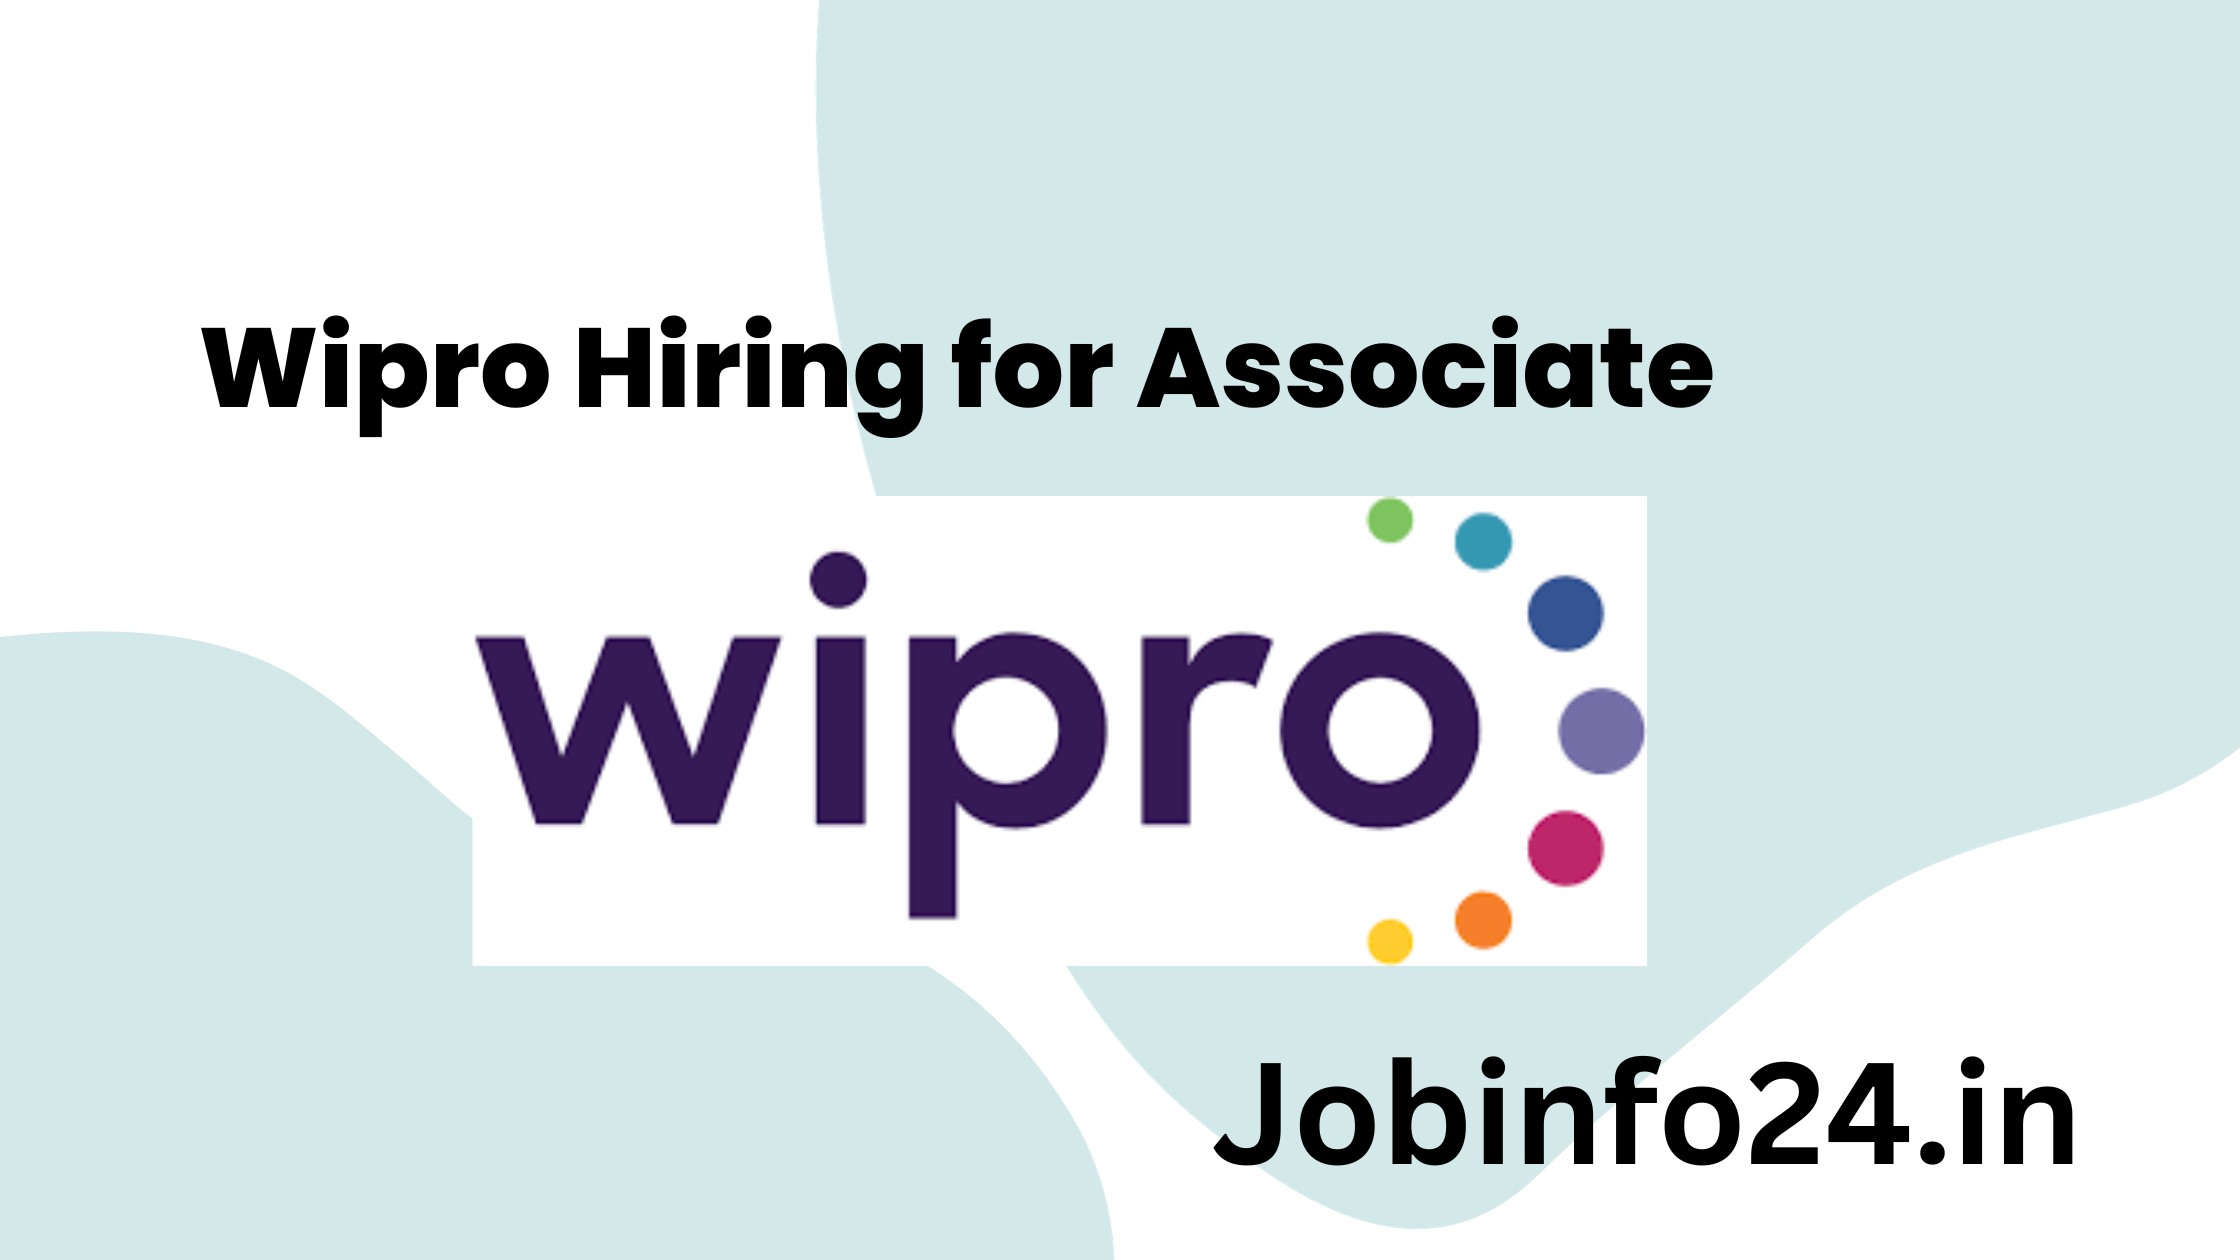 Wipro Hiring for Associate